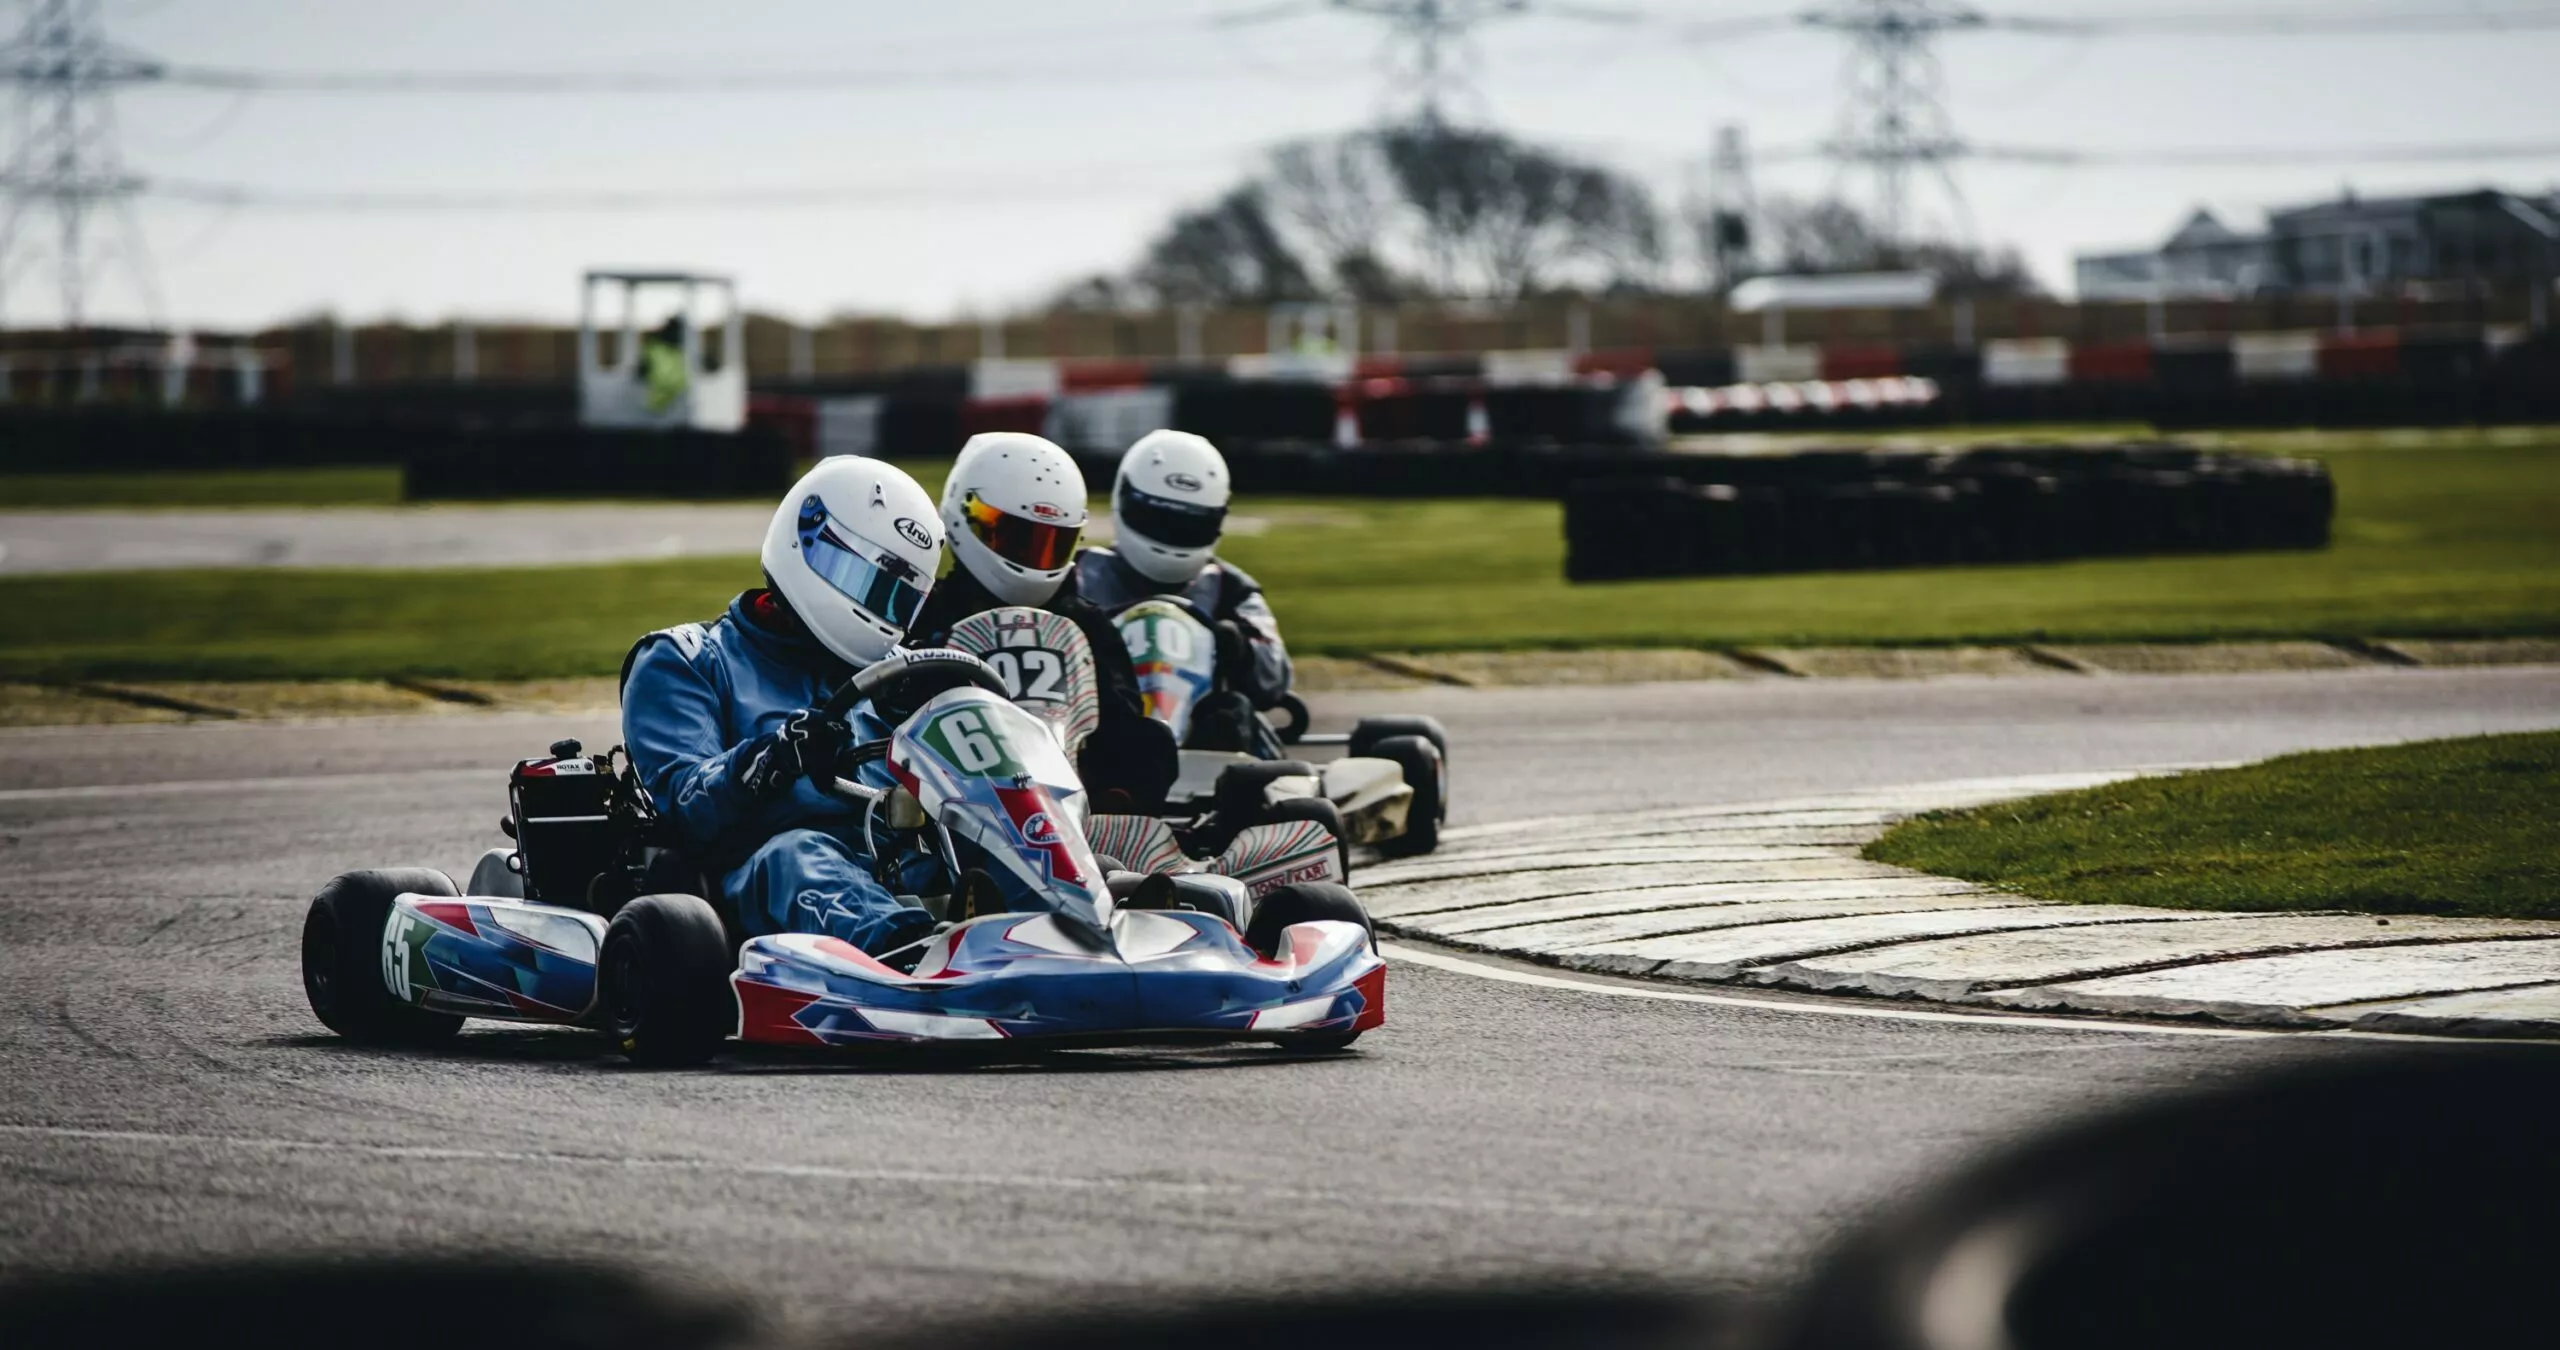 PF International Kart Circuit in United Kingdom, Europe | Karting - Rated 4.2